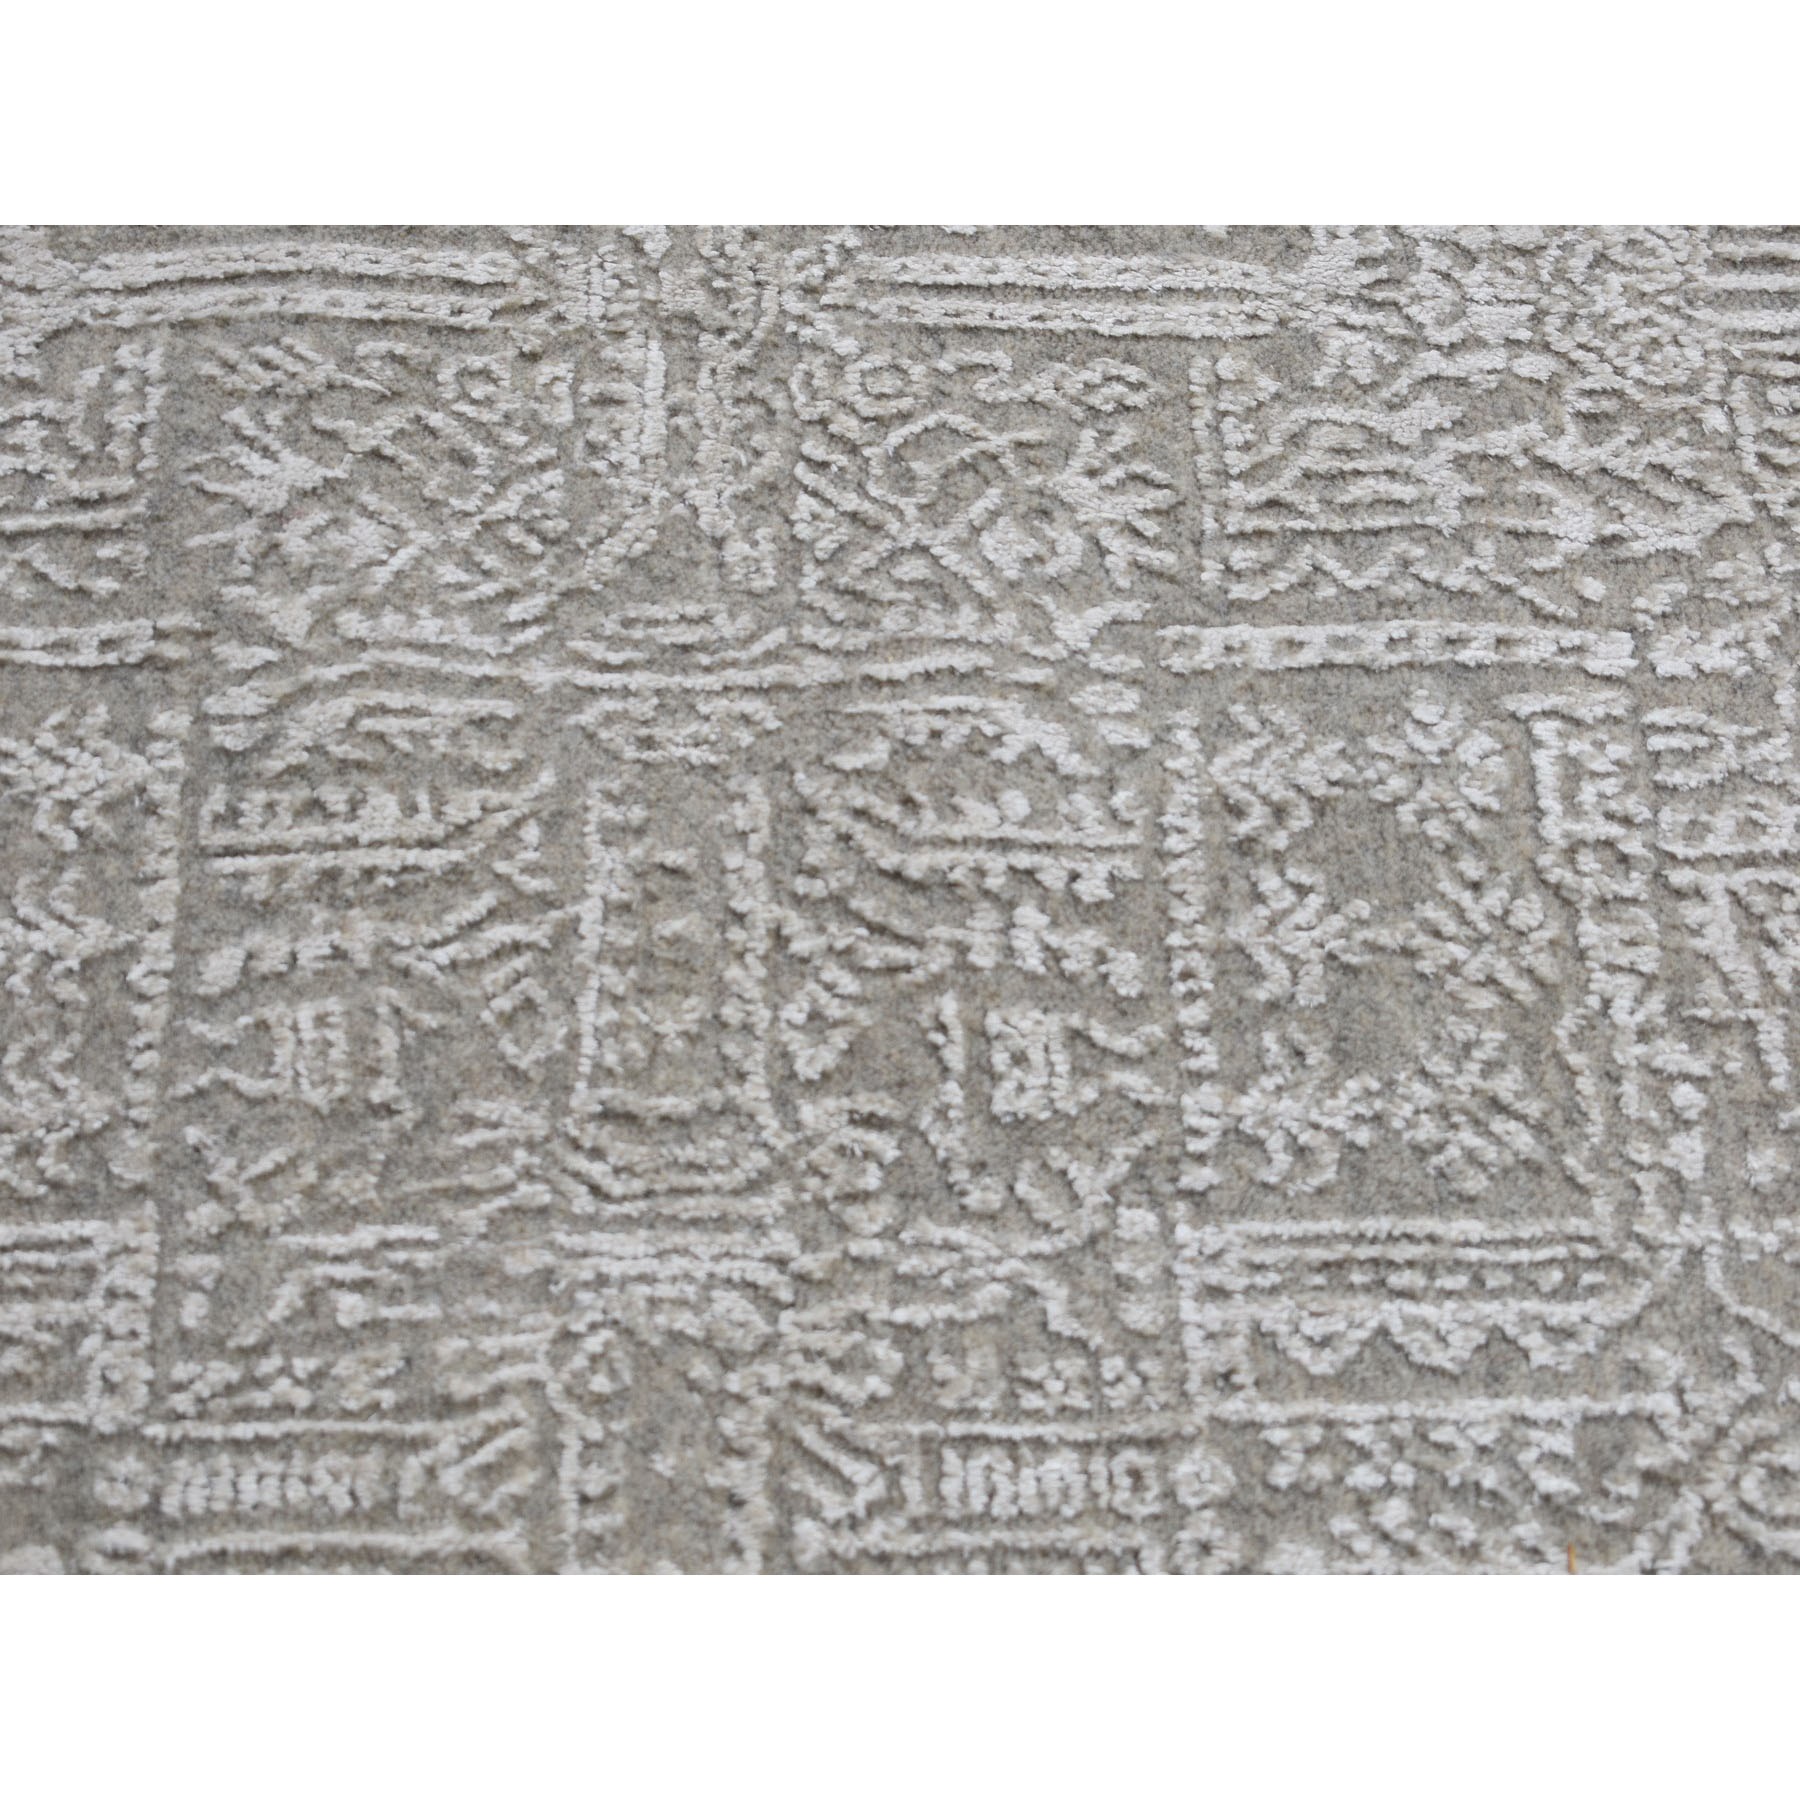 11-9 x15-1  Oversized Gray Fine jacquard Hand Loomed Modern Wool And Art Silk Oriental Rug 